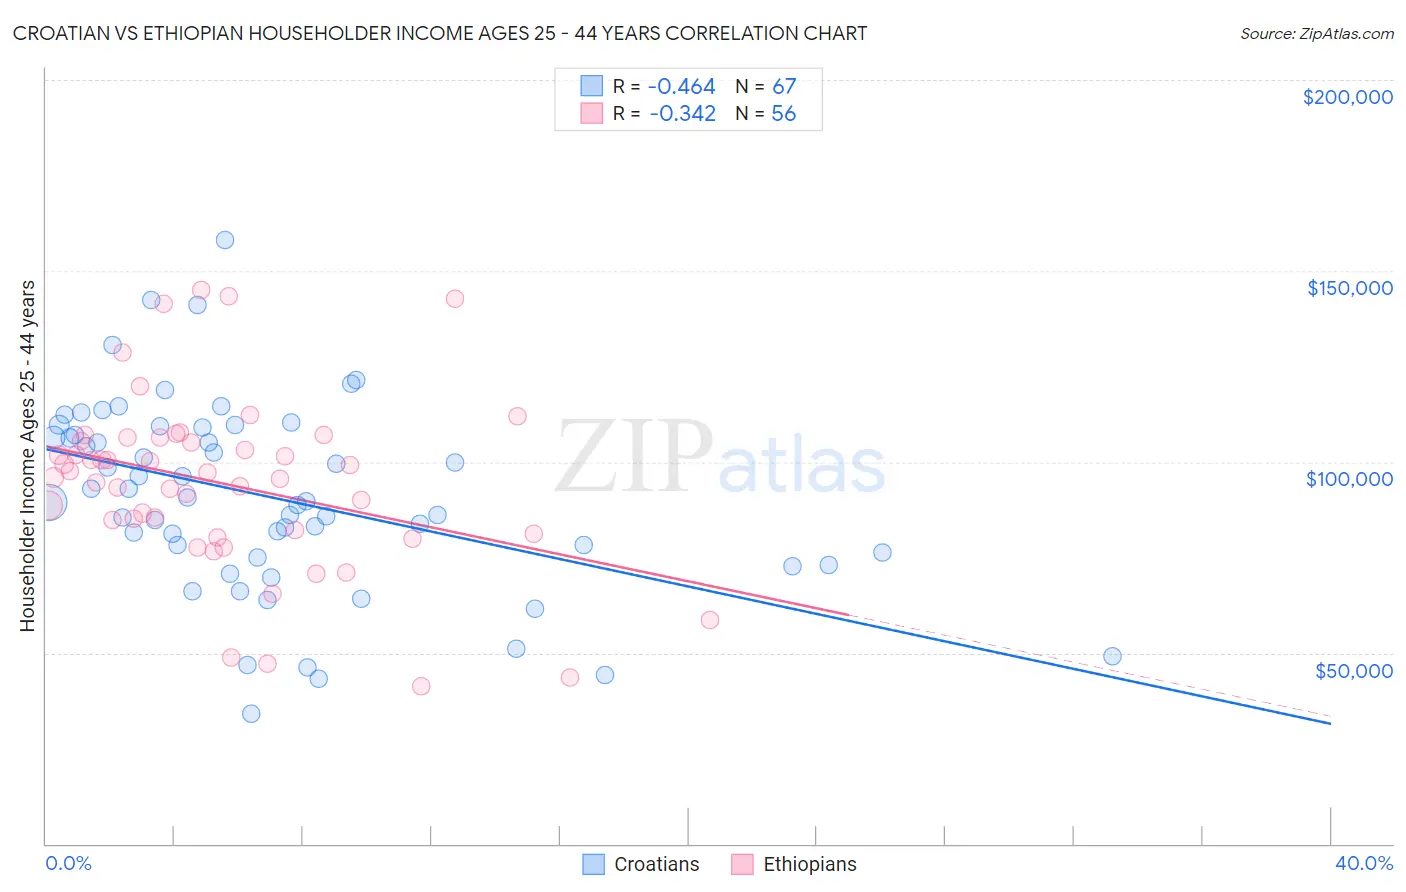 Croatian vs Ethiopian Householder Income Ages 25 - 44 years